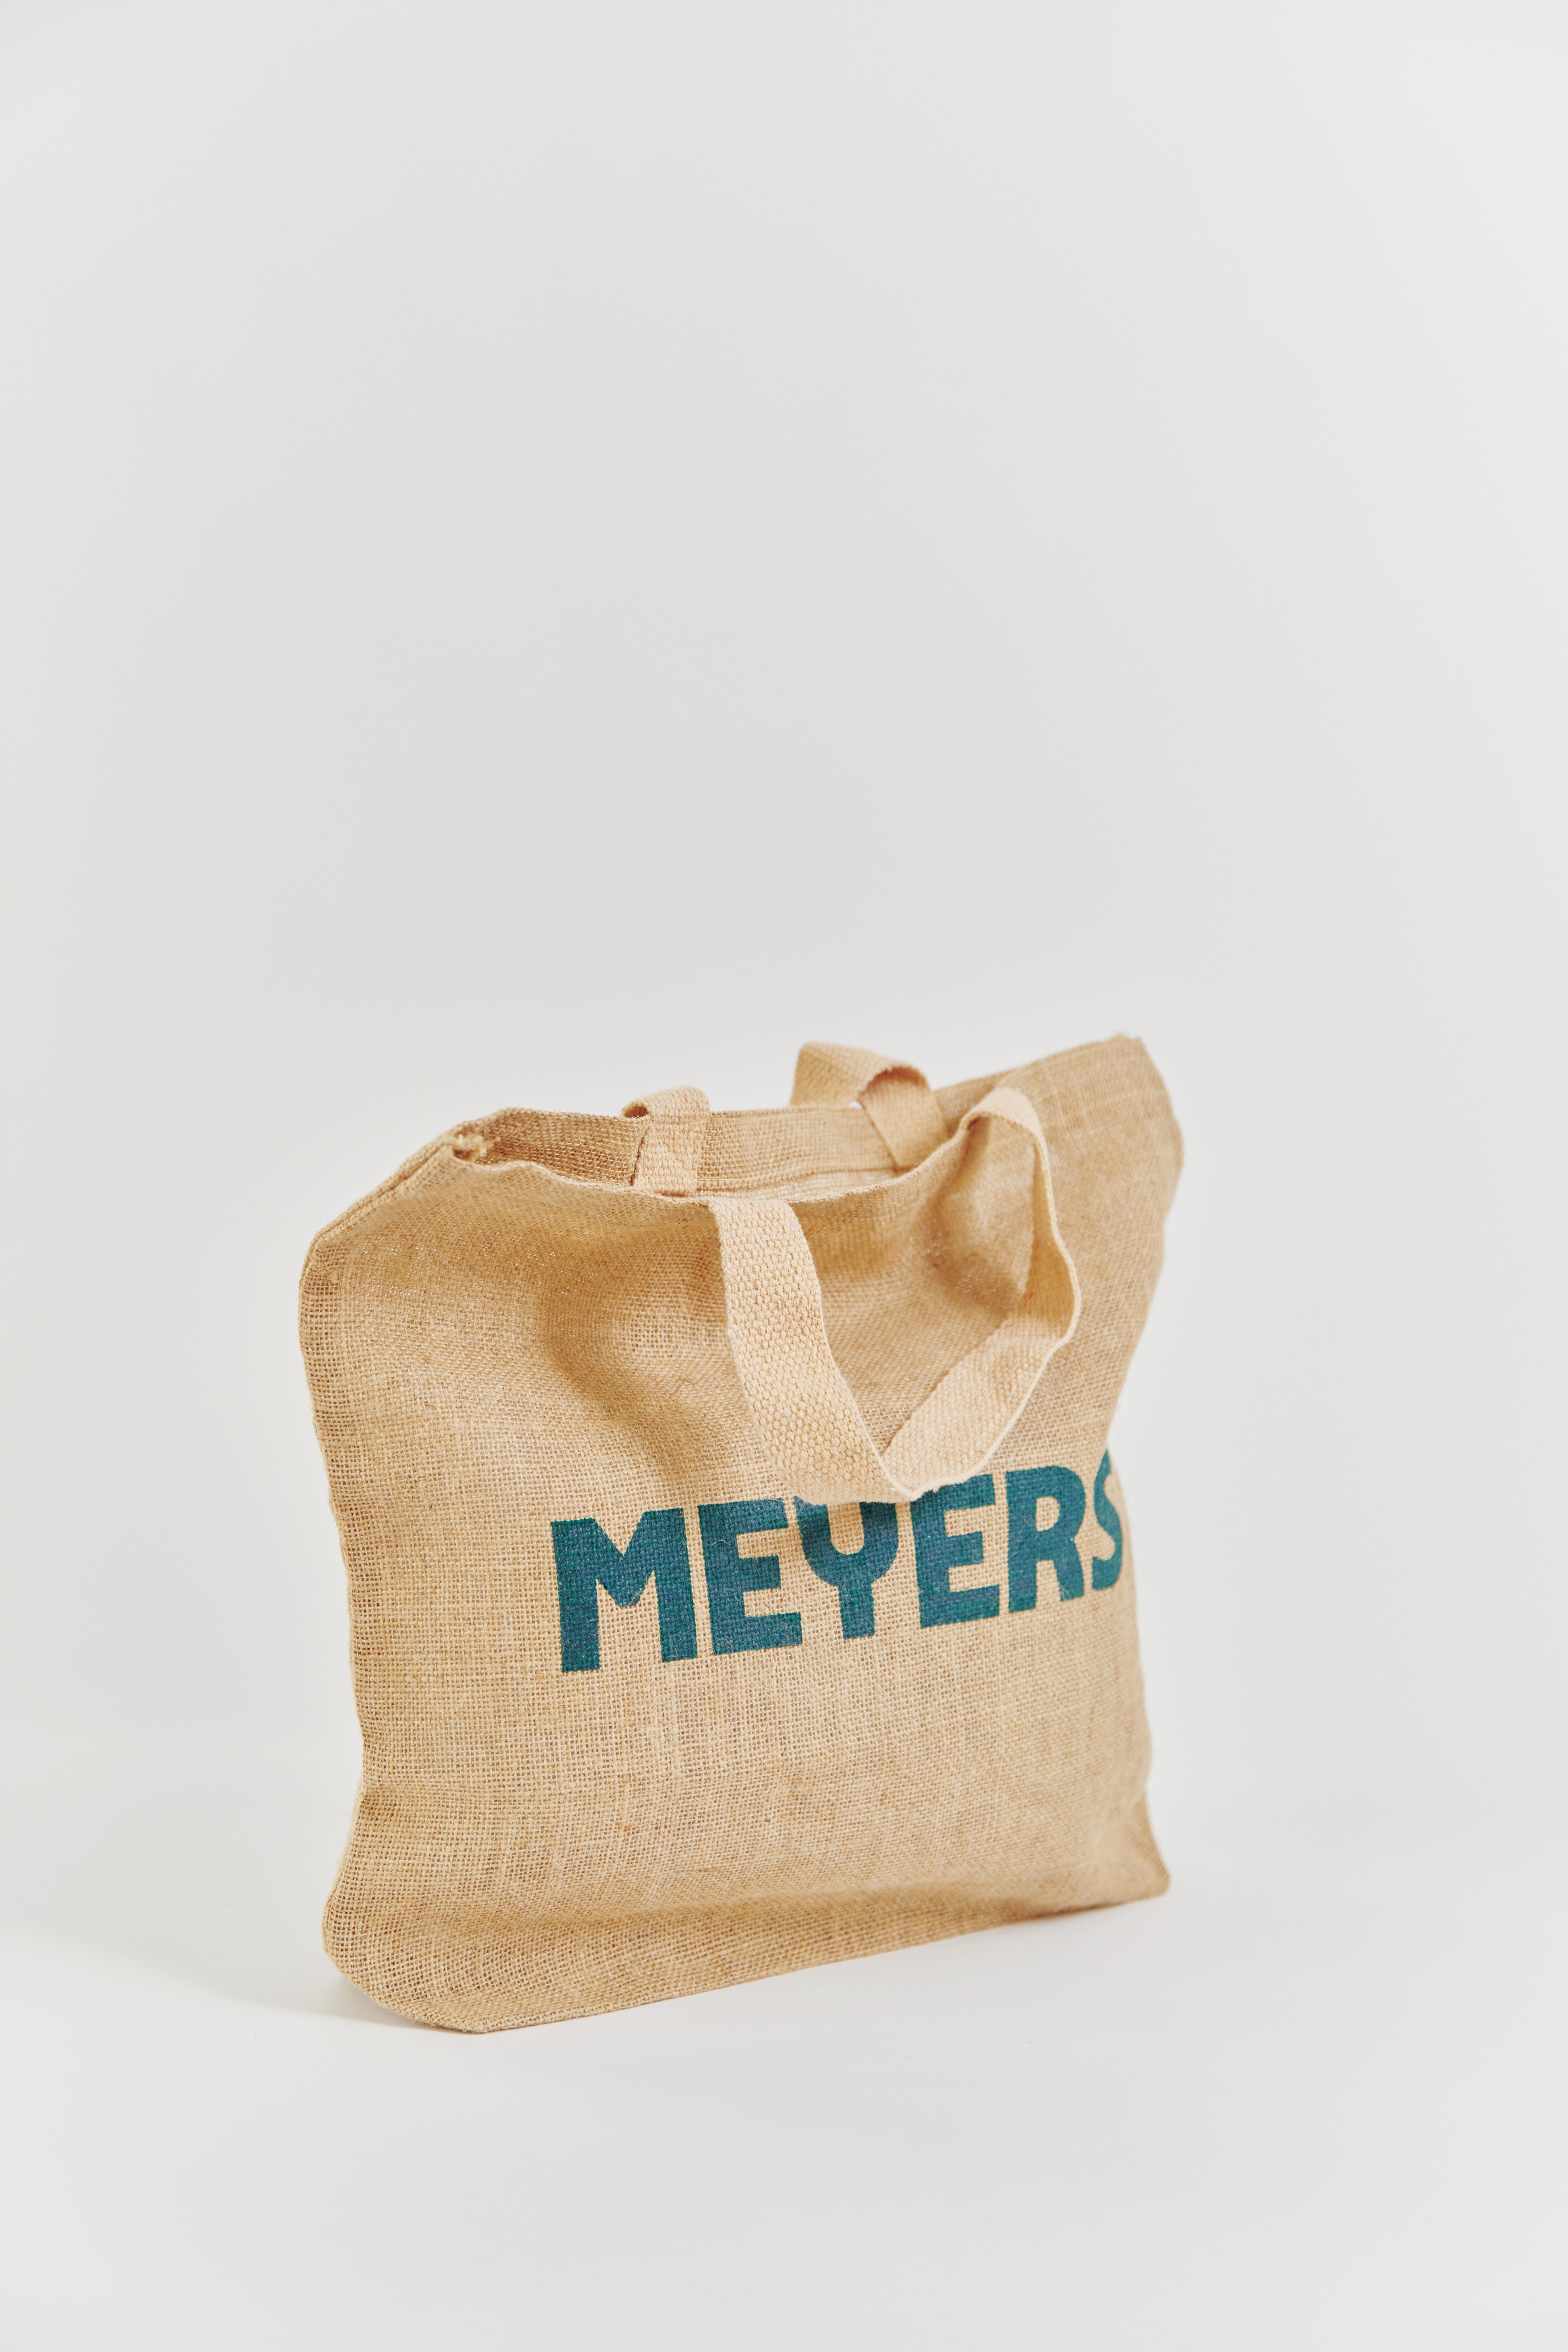 Meyers - jute